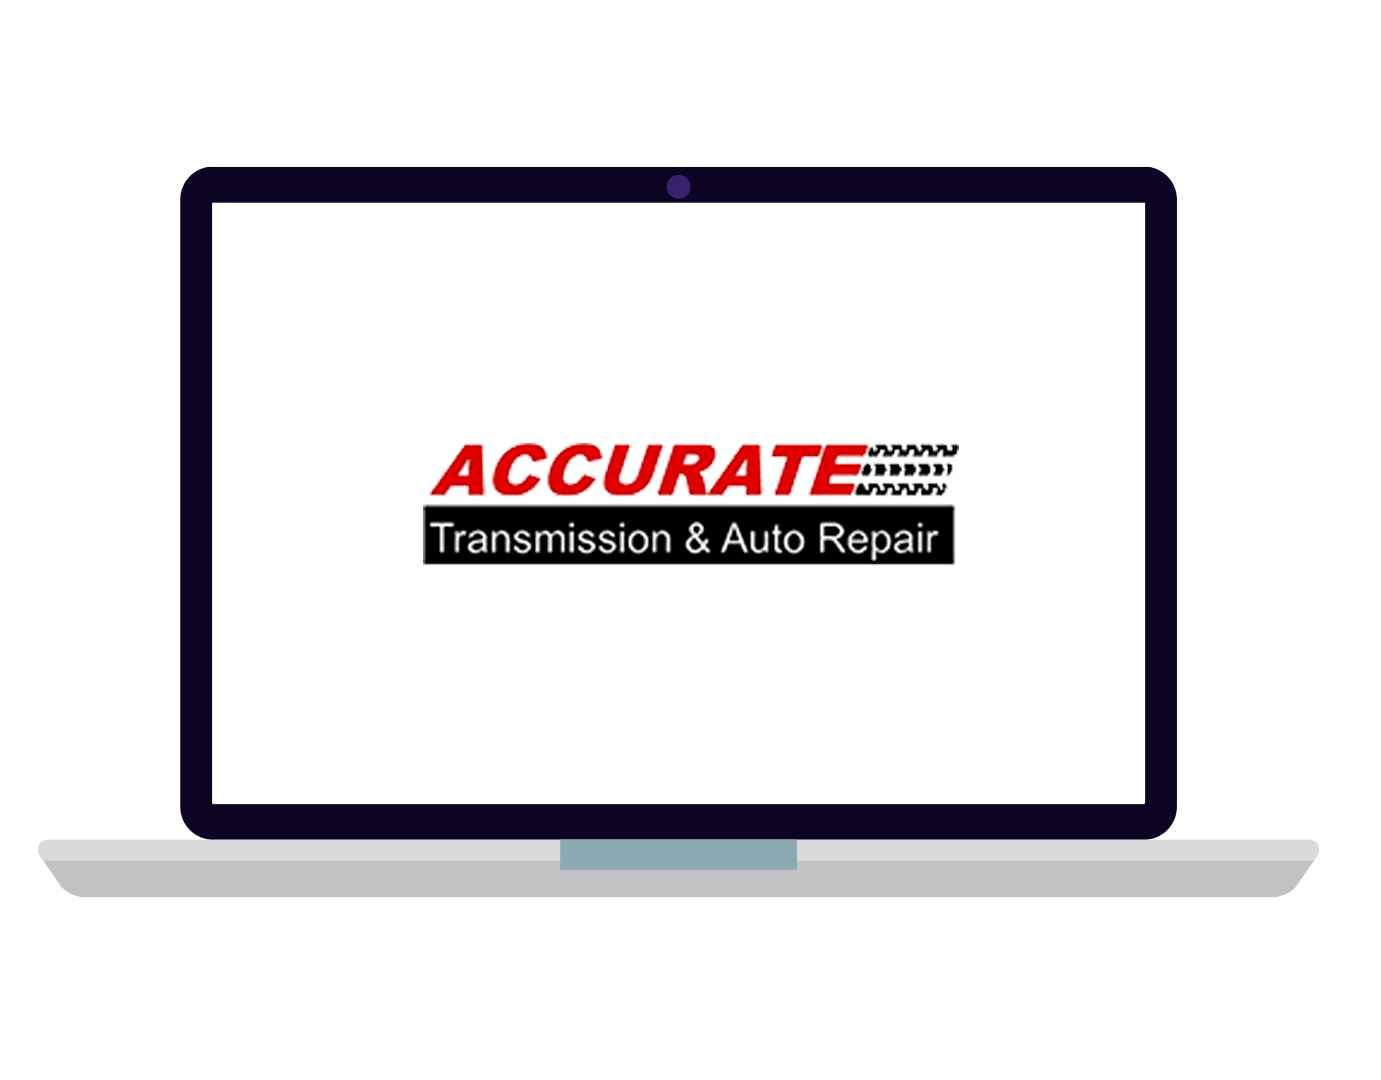 Accurate Transmission & Auto Repair | Laborem Edge Digital Marketing Agency